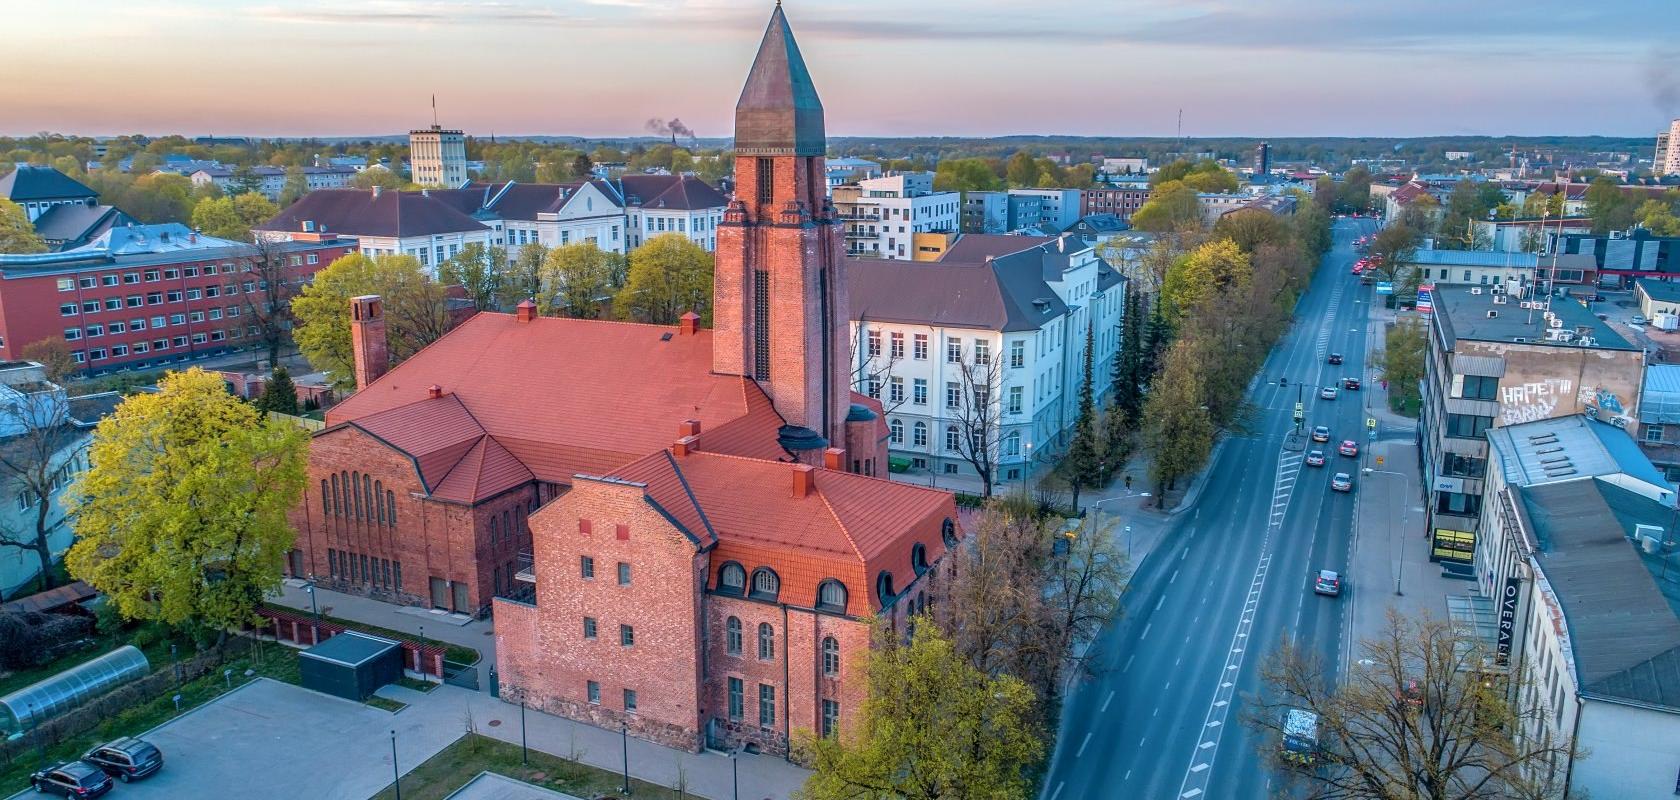 Spire of St. Paul’s Church in Tartu